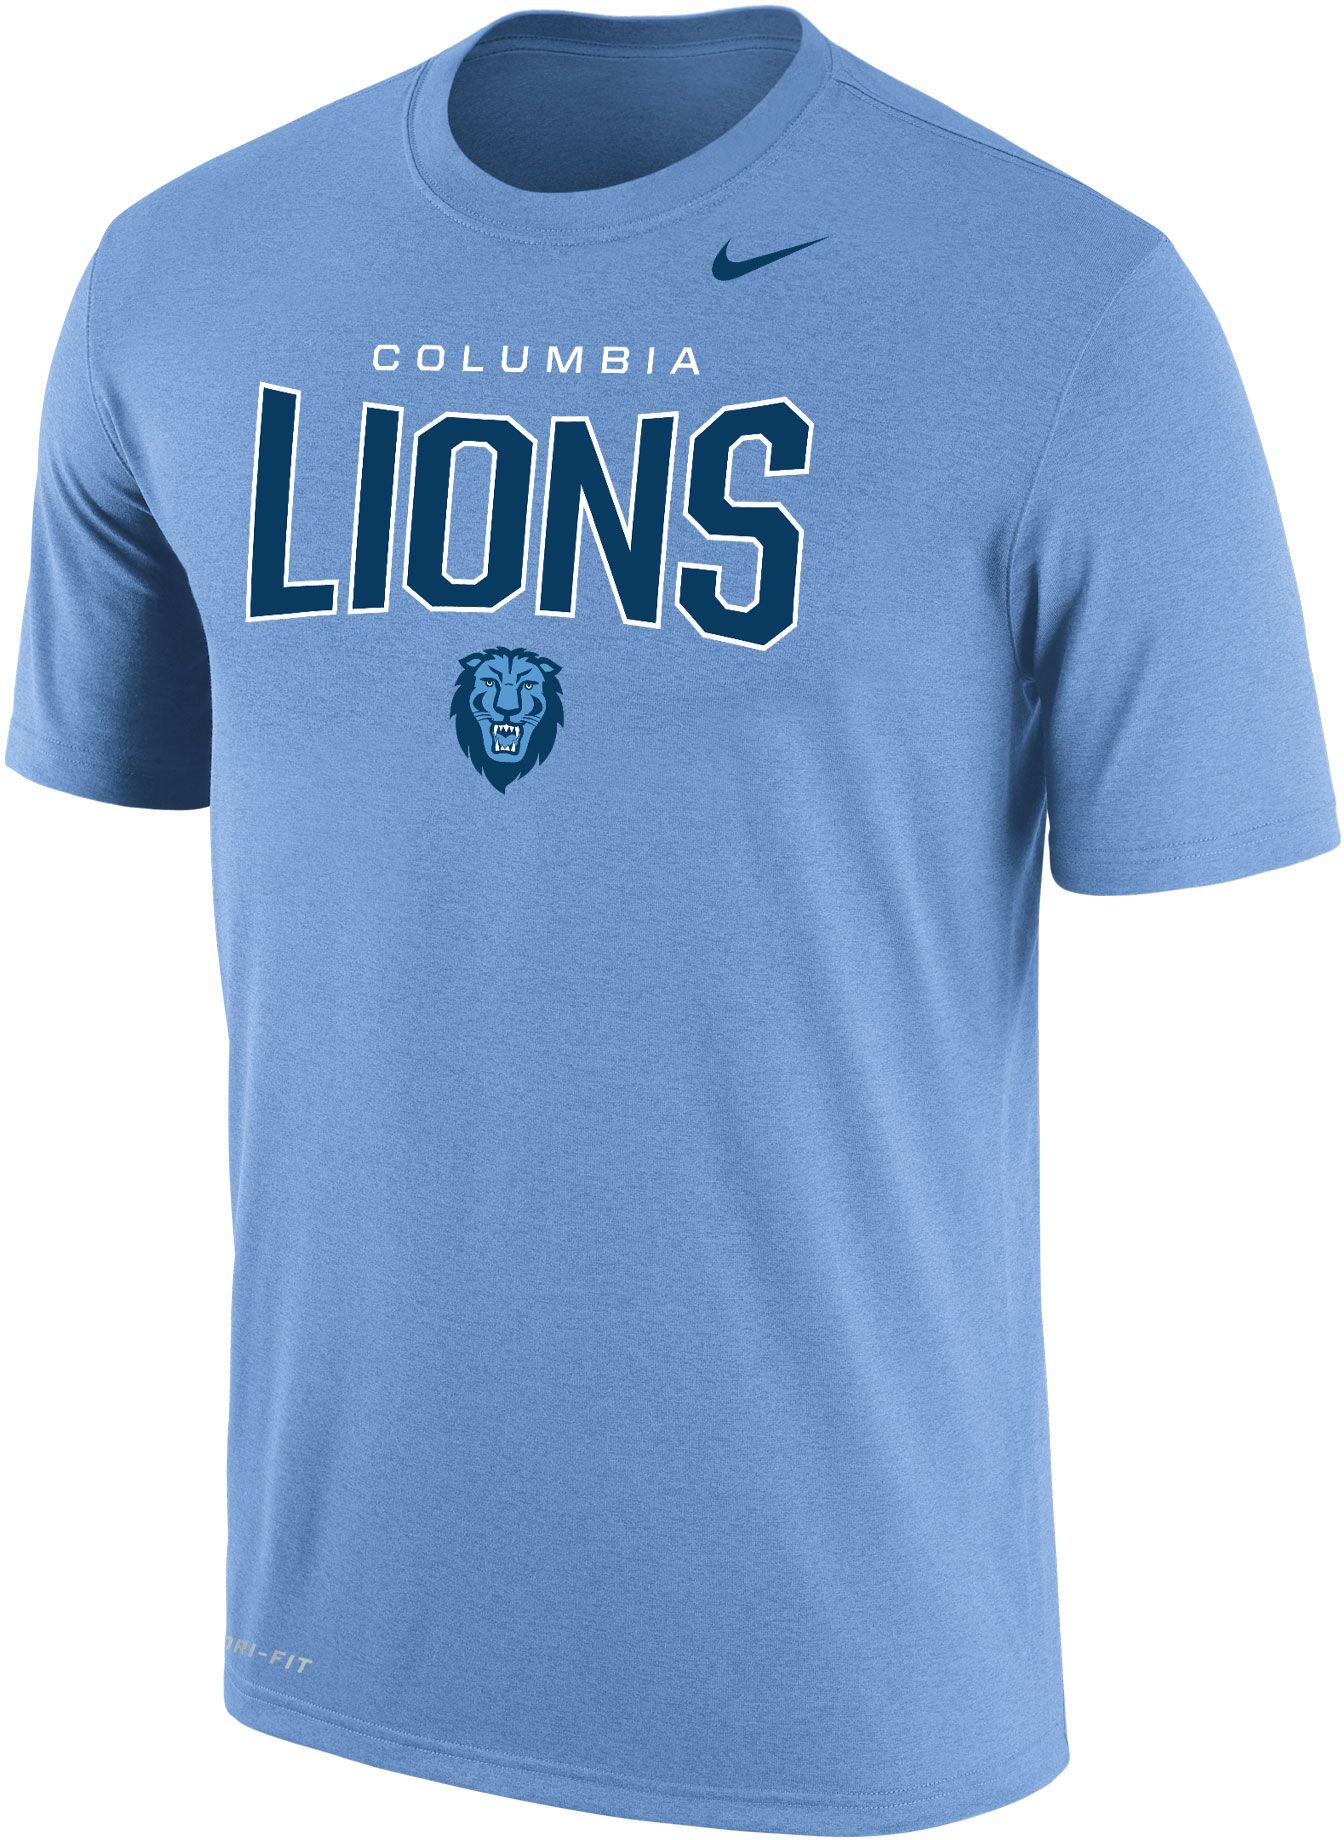 Nike / Men's Columbia Bluejays Columbia Blue Dri-FIT Cotton T-Shirt